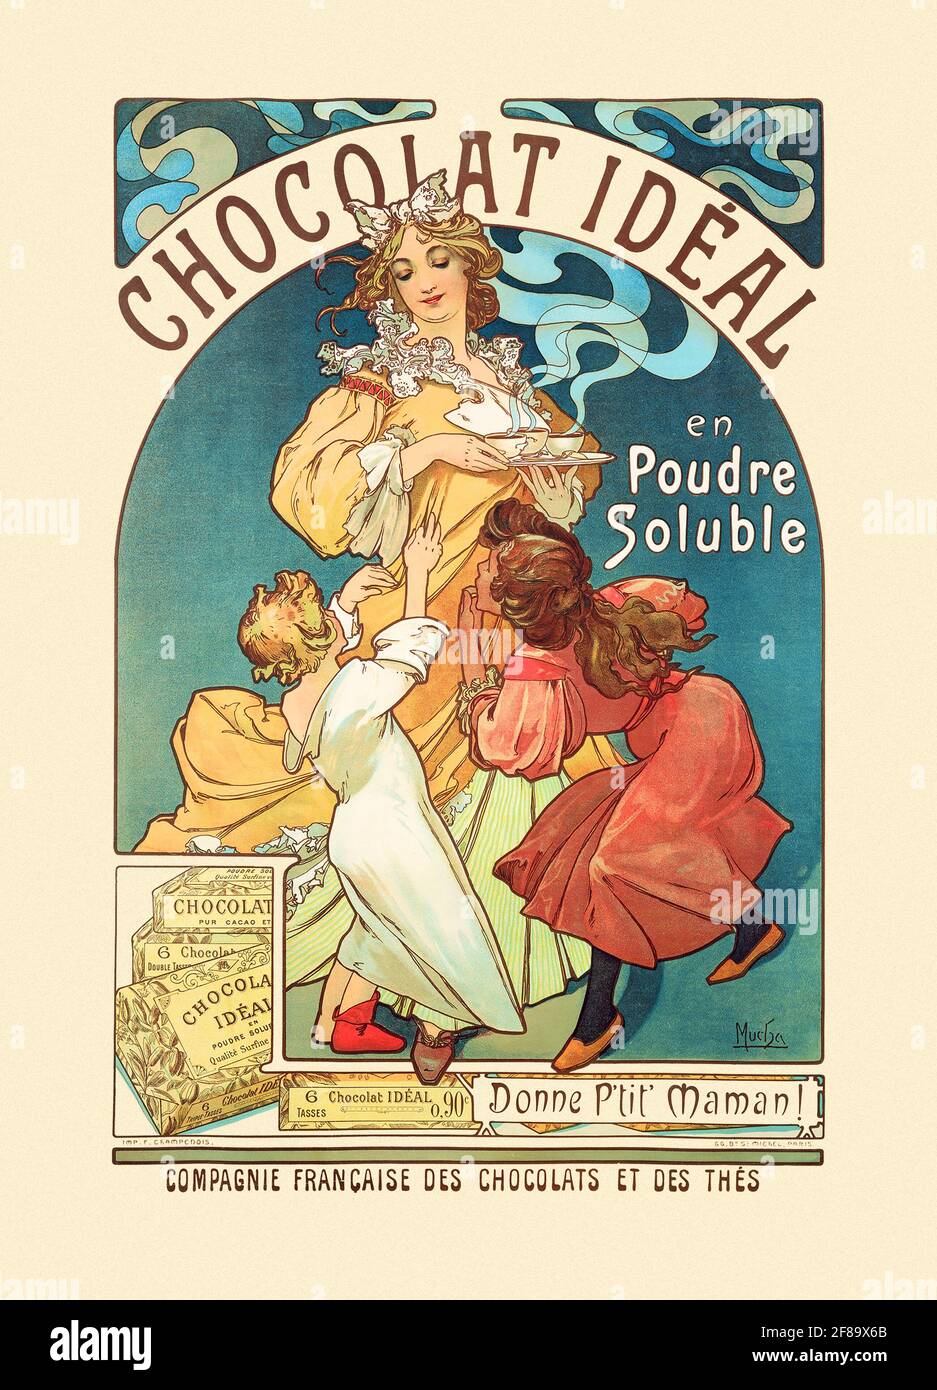 Chocolat Ideal - Art Nouveau di Alphonse Mucha. 1897. Potenziata digitalmente. Pubblicità creata per la compagnie Franaise des Chocolats des Thés. Foto Stock